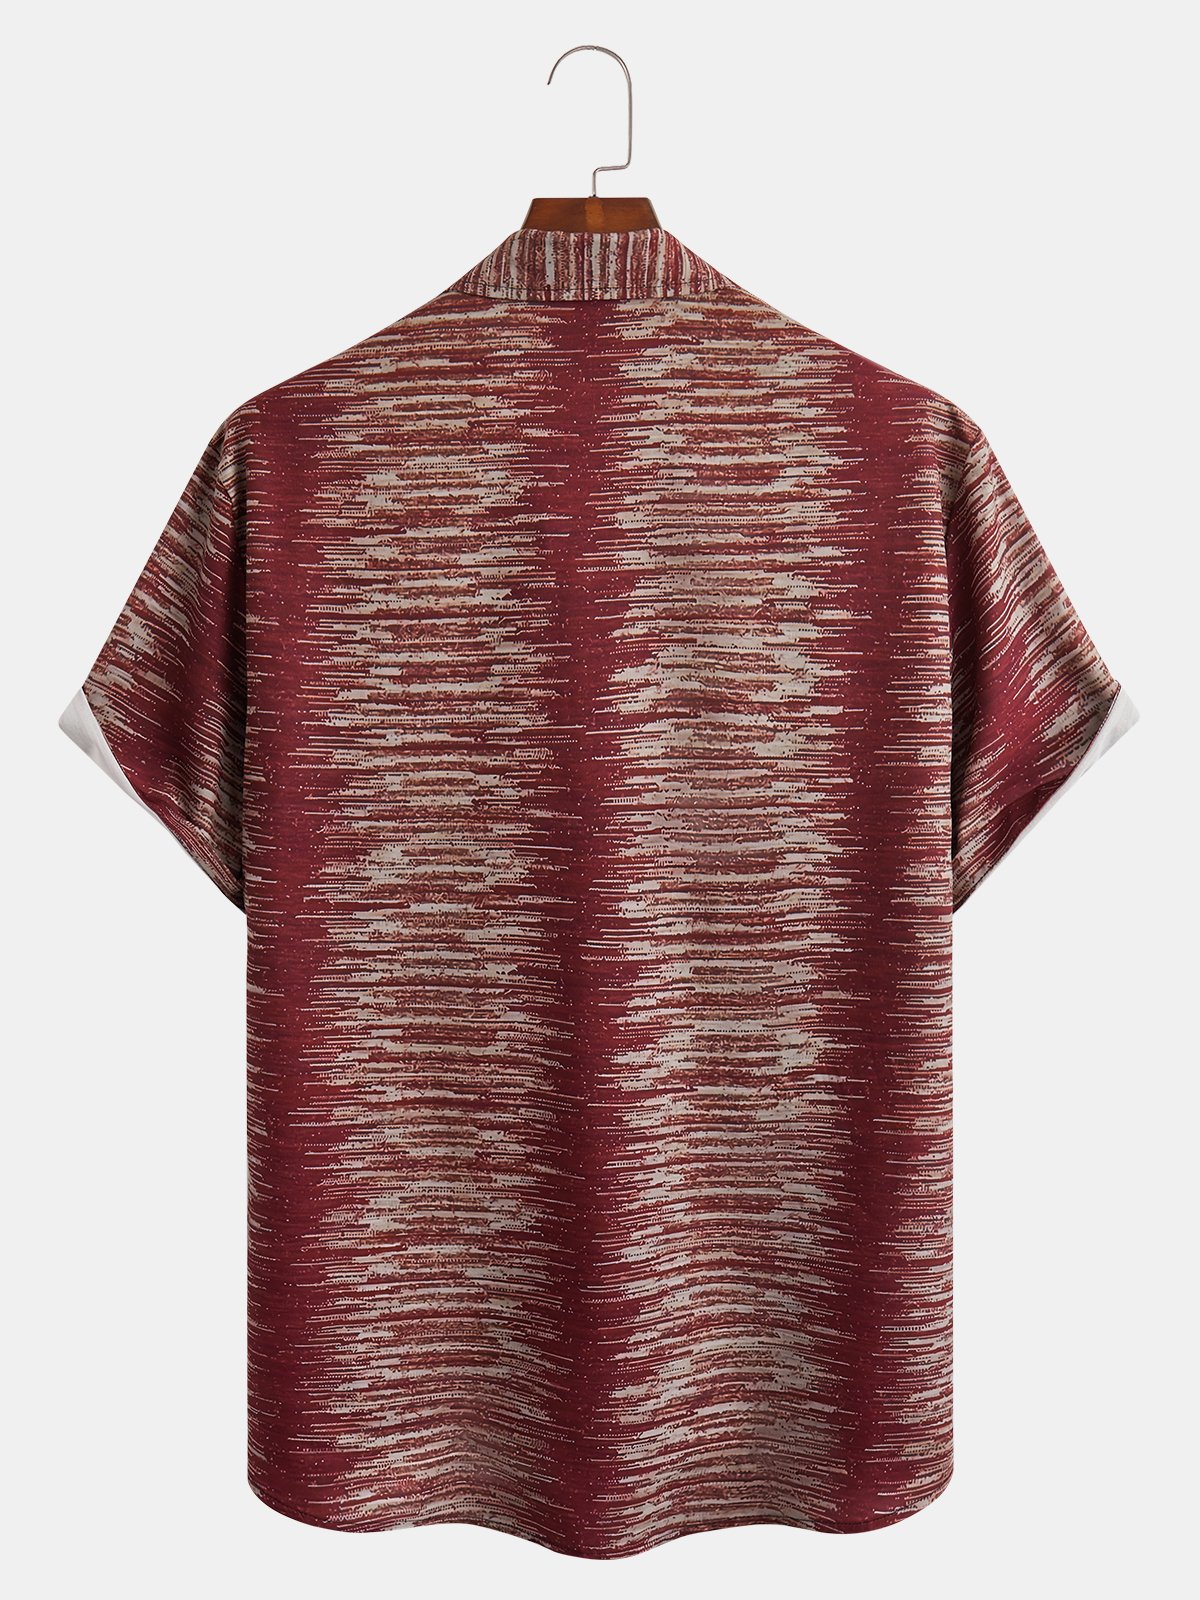 Abstract Texture Chest Pocket Short Sleeve Shirt